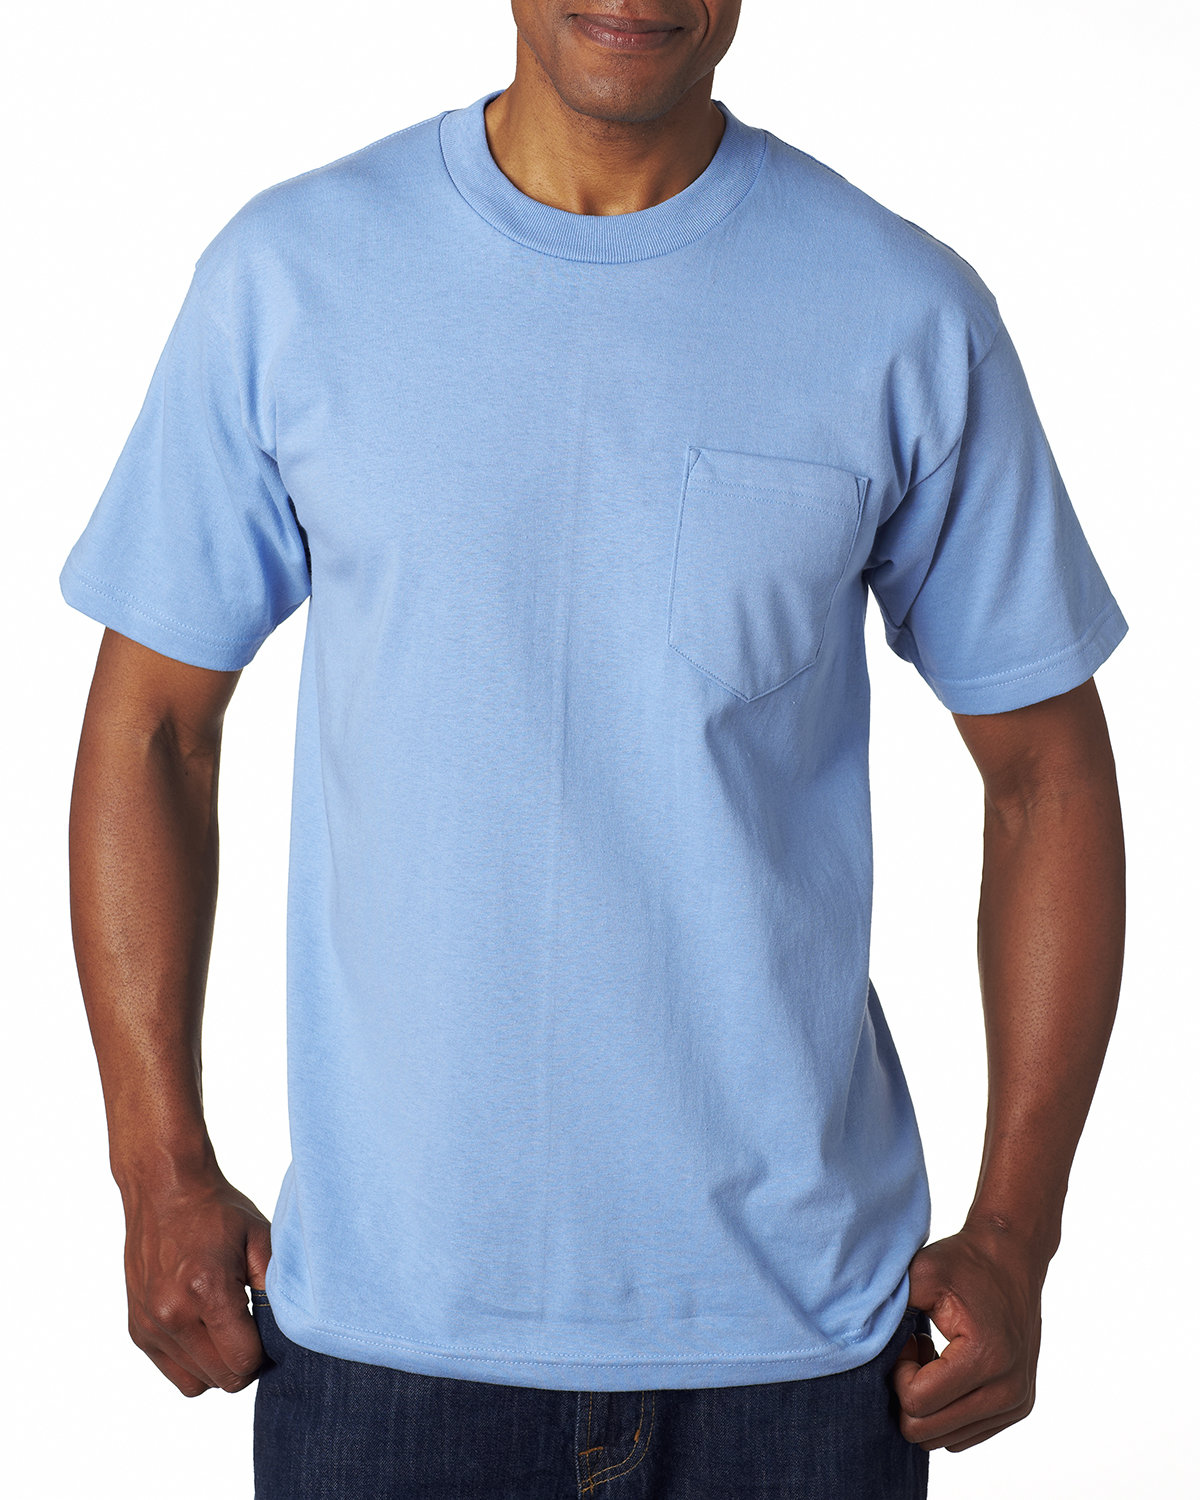 Bayside Adult 6.1 oz., 100% Cotton Pocket T-Shirt CAROLINA BLUE 